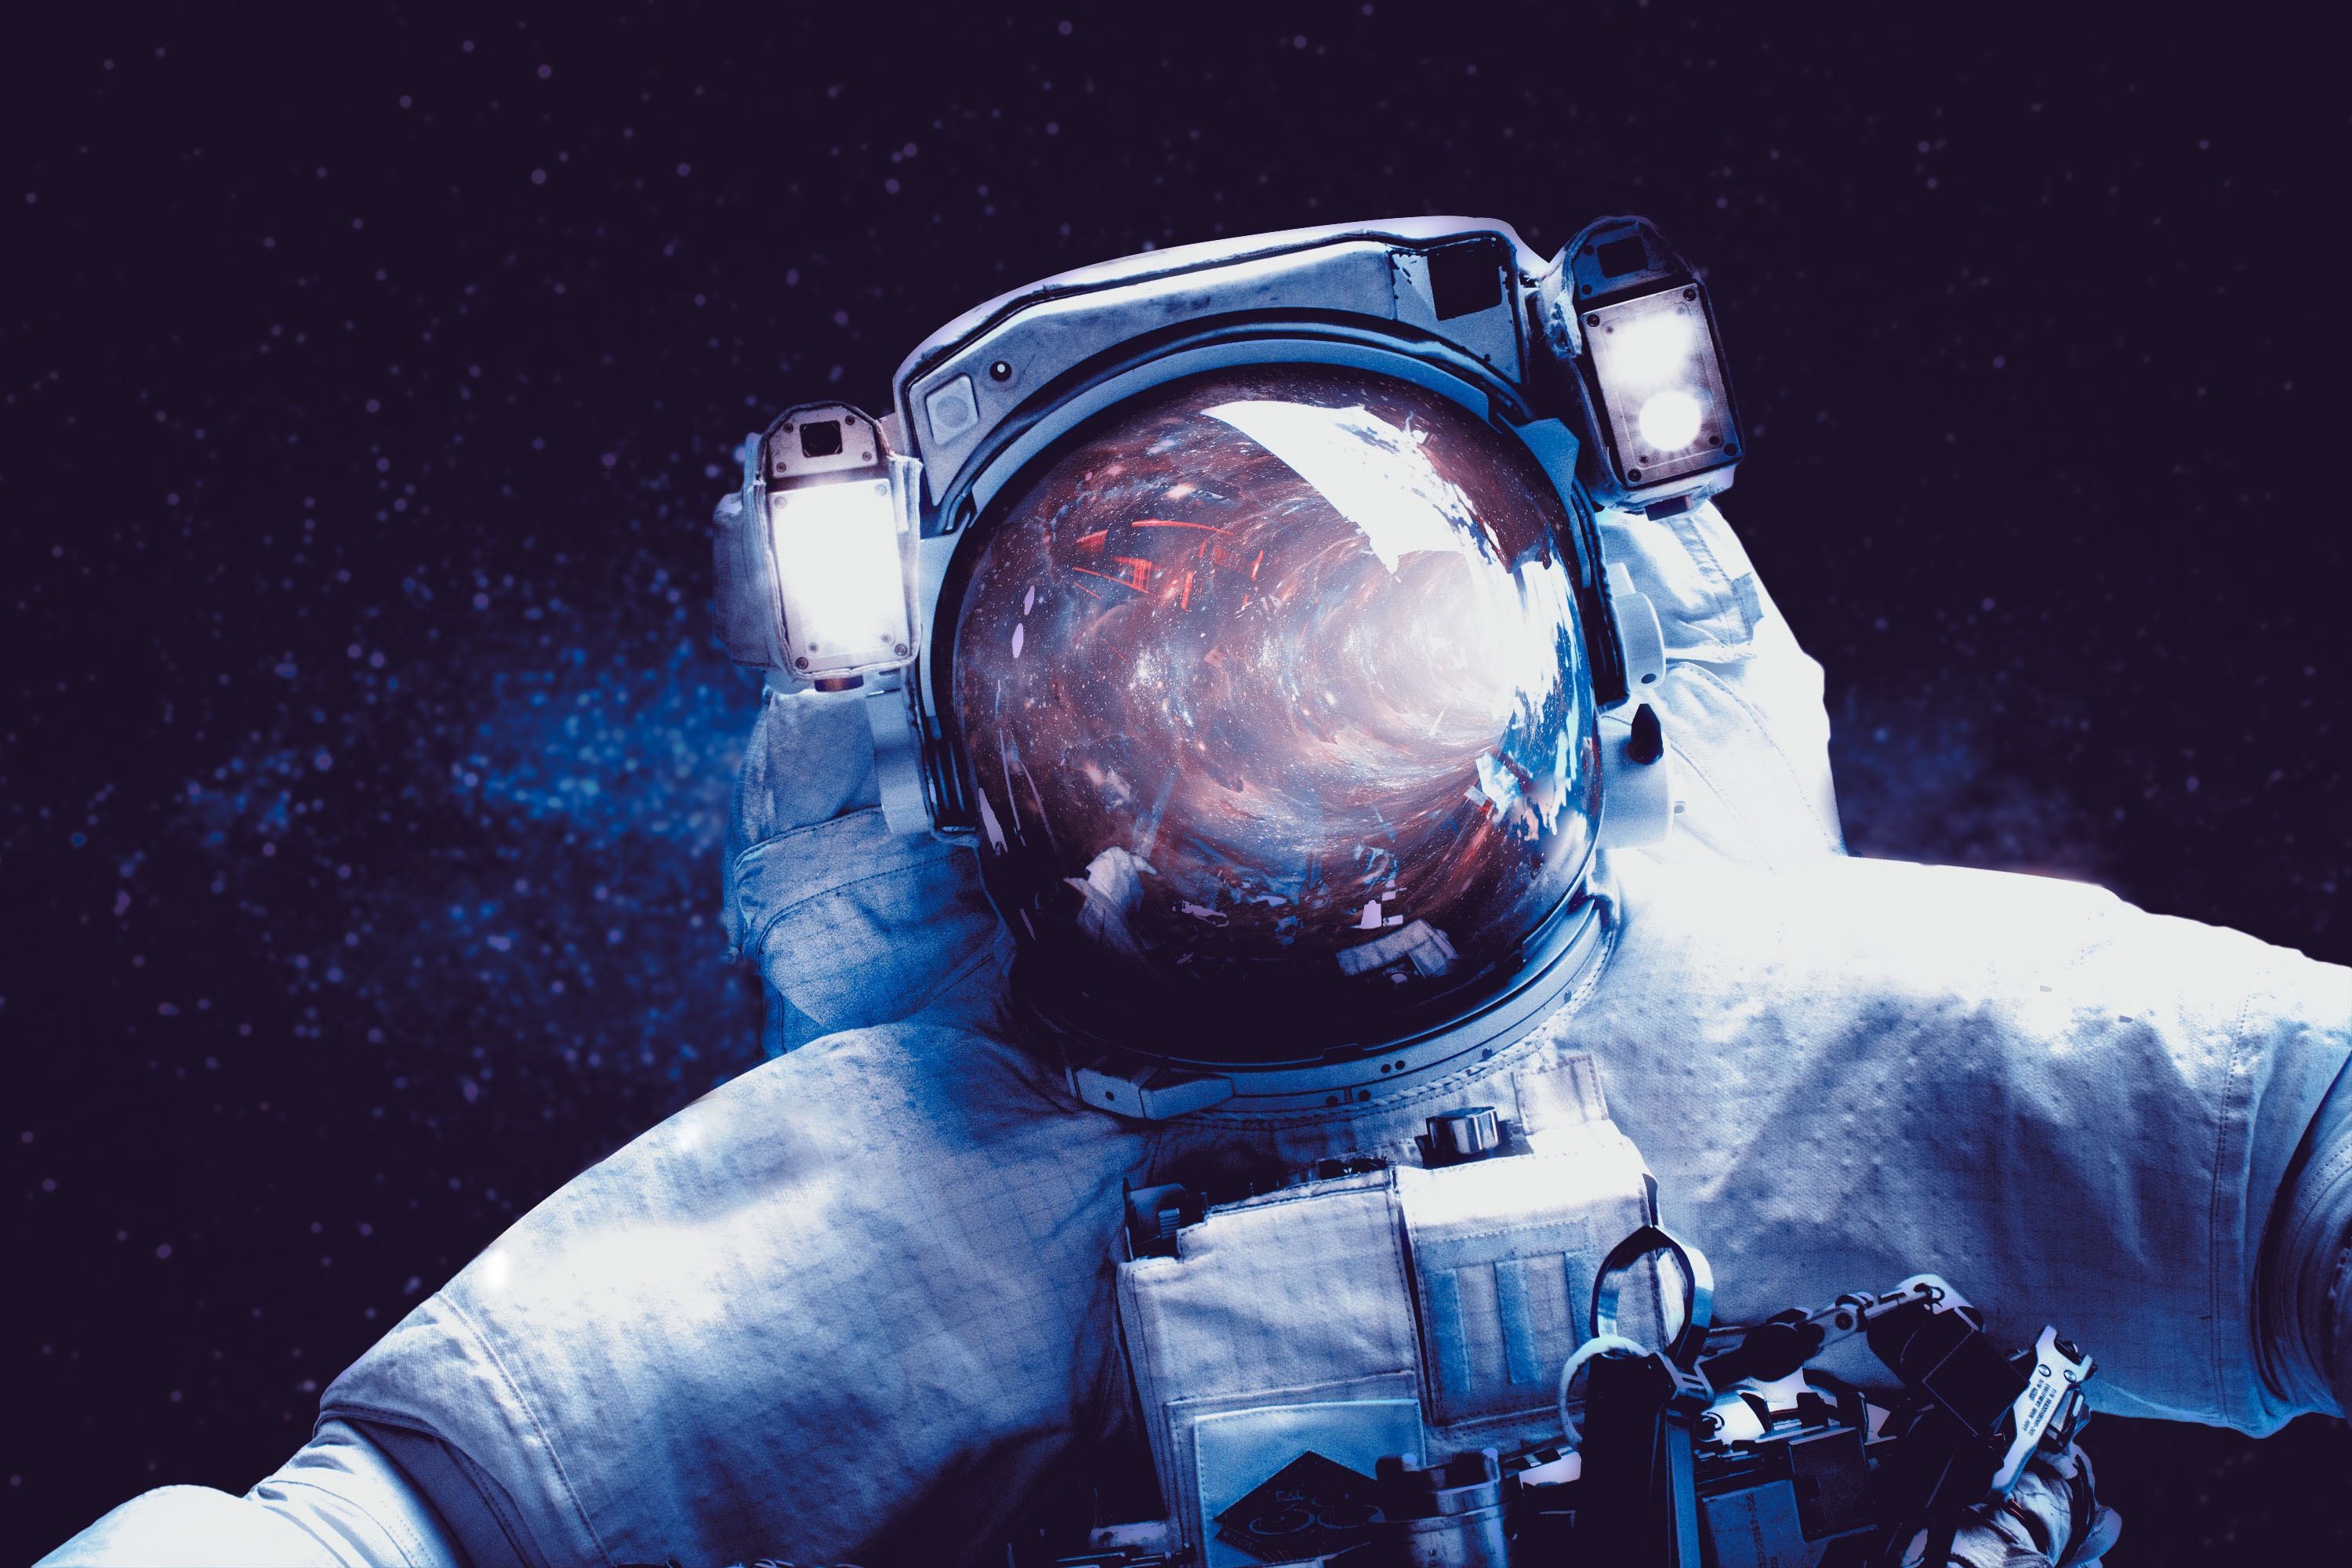 Phone Background Full HD universe, space suit, astronaut, spacesuit